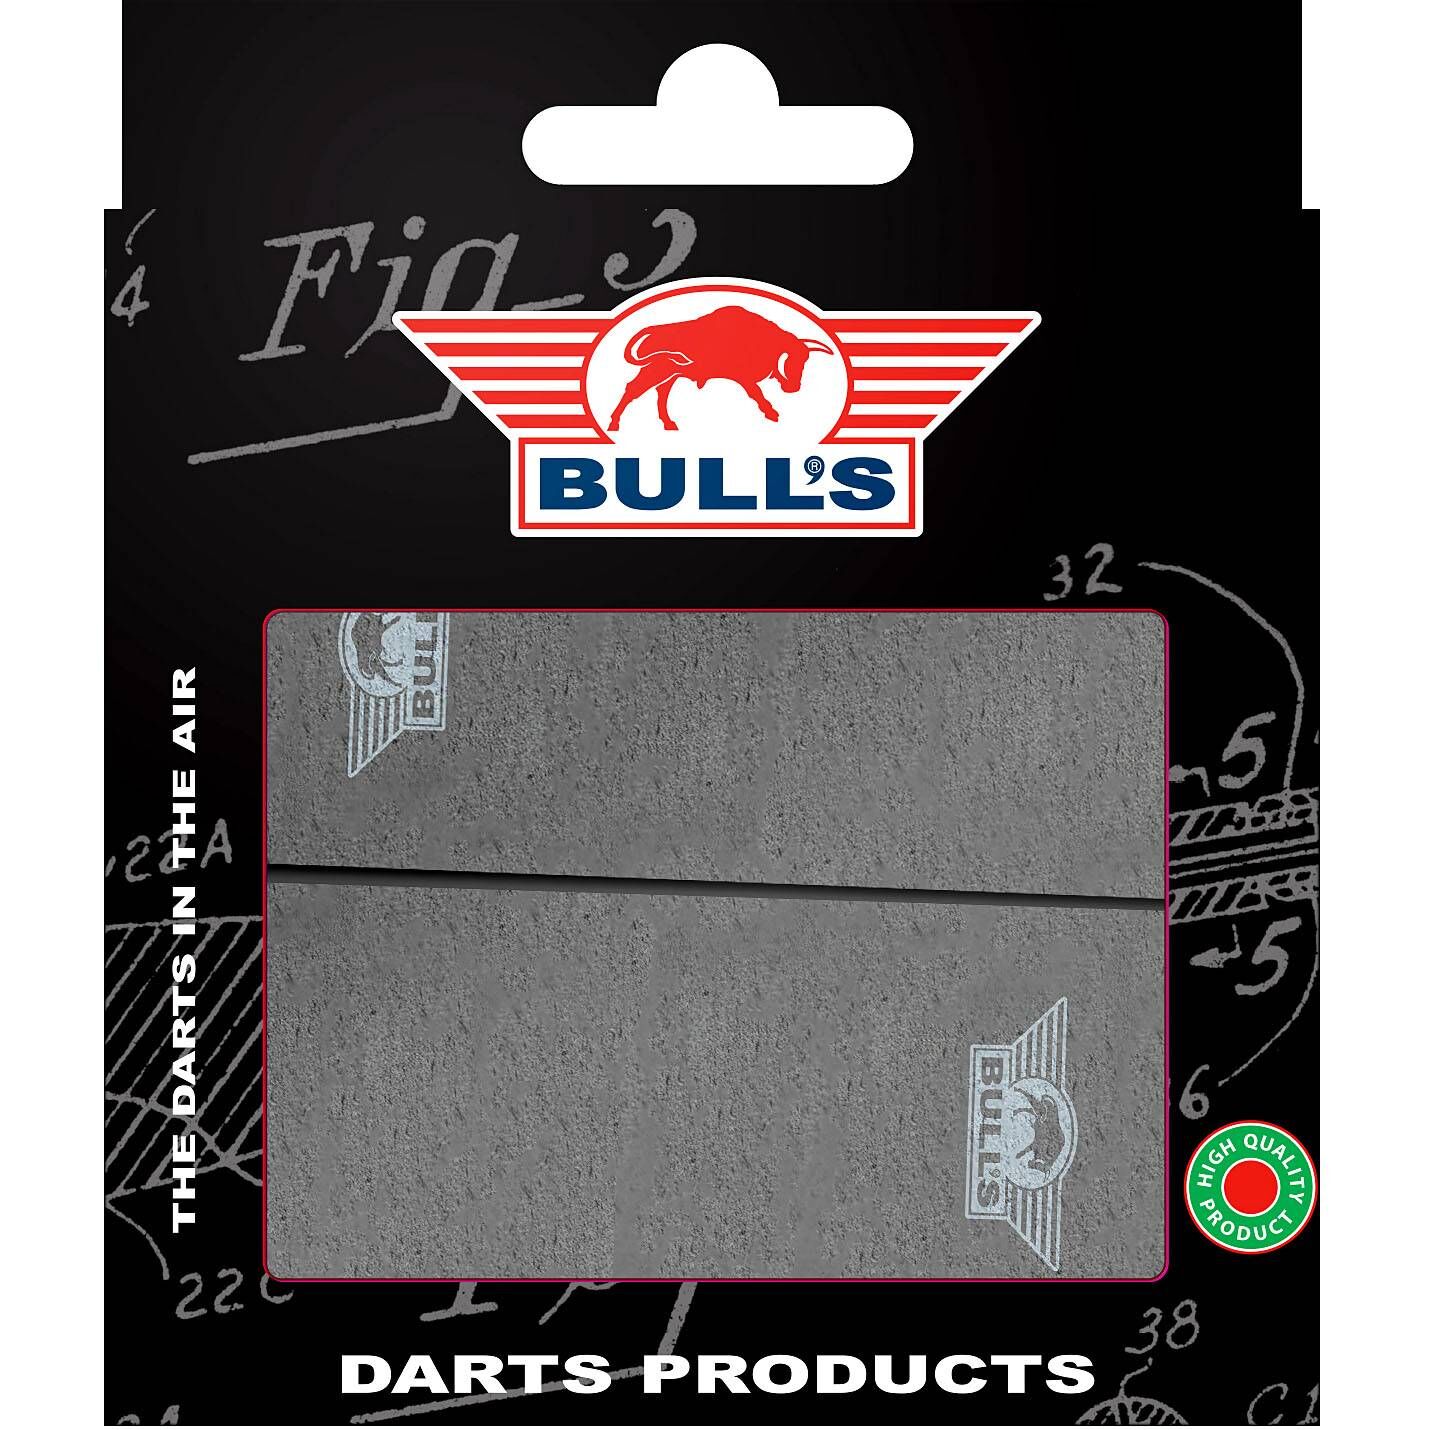 Bull's NL - Dartboard Keile